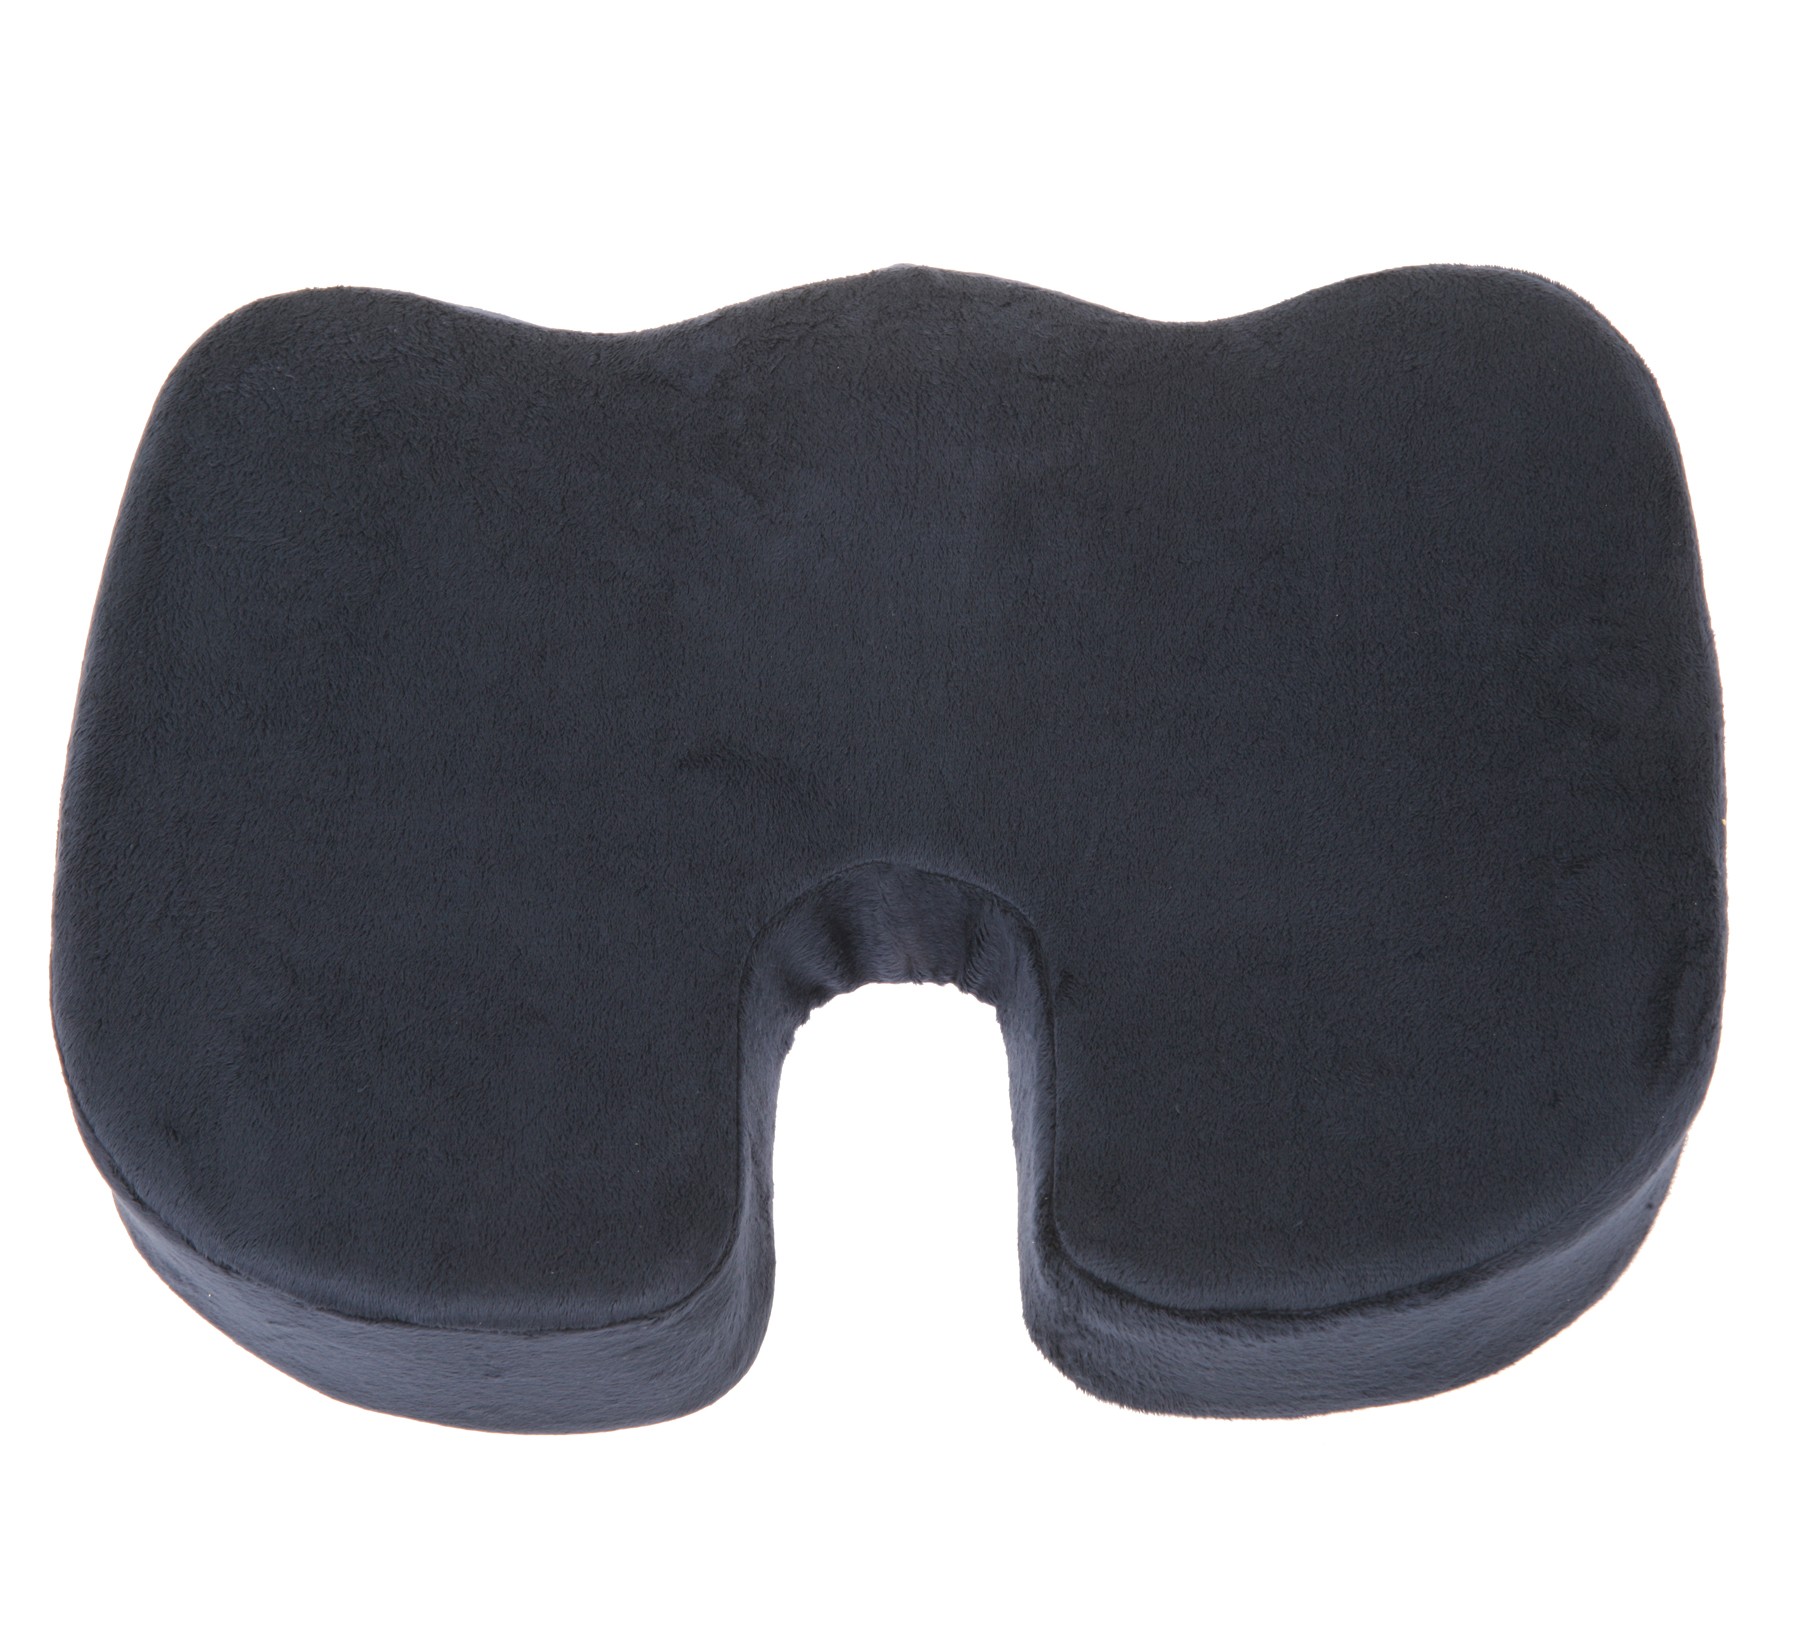 Enhanced Seat Cushion, Memory Foam Coccyx Cushion for Tailbone Pain, Office Chair Car Seat Cushion, Sciatica & Back Pain Relief, Black, Size: One Size